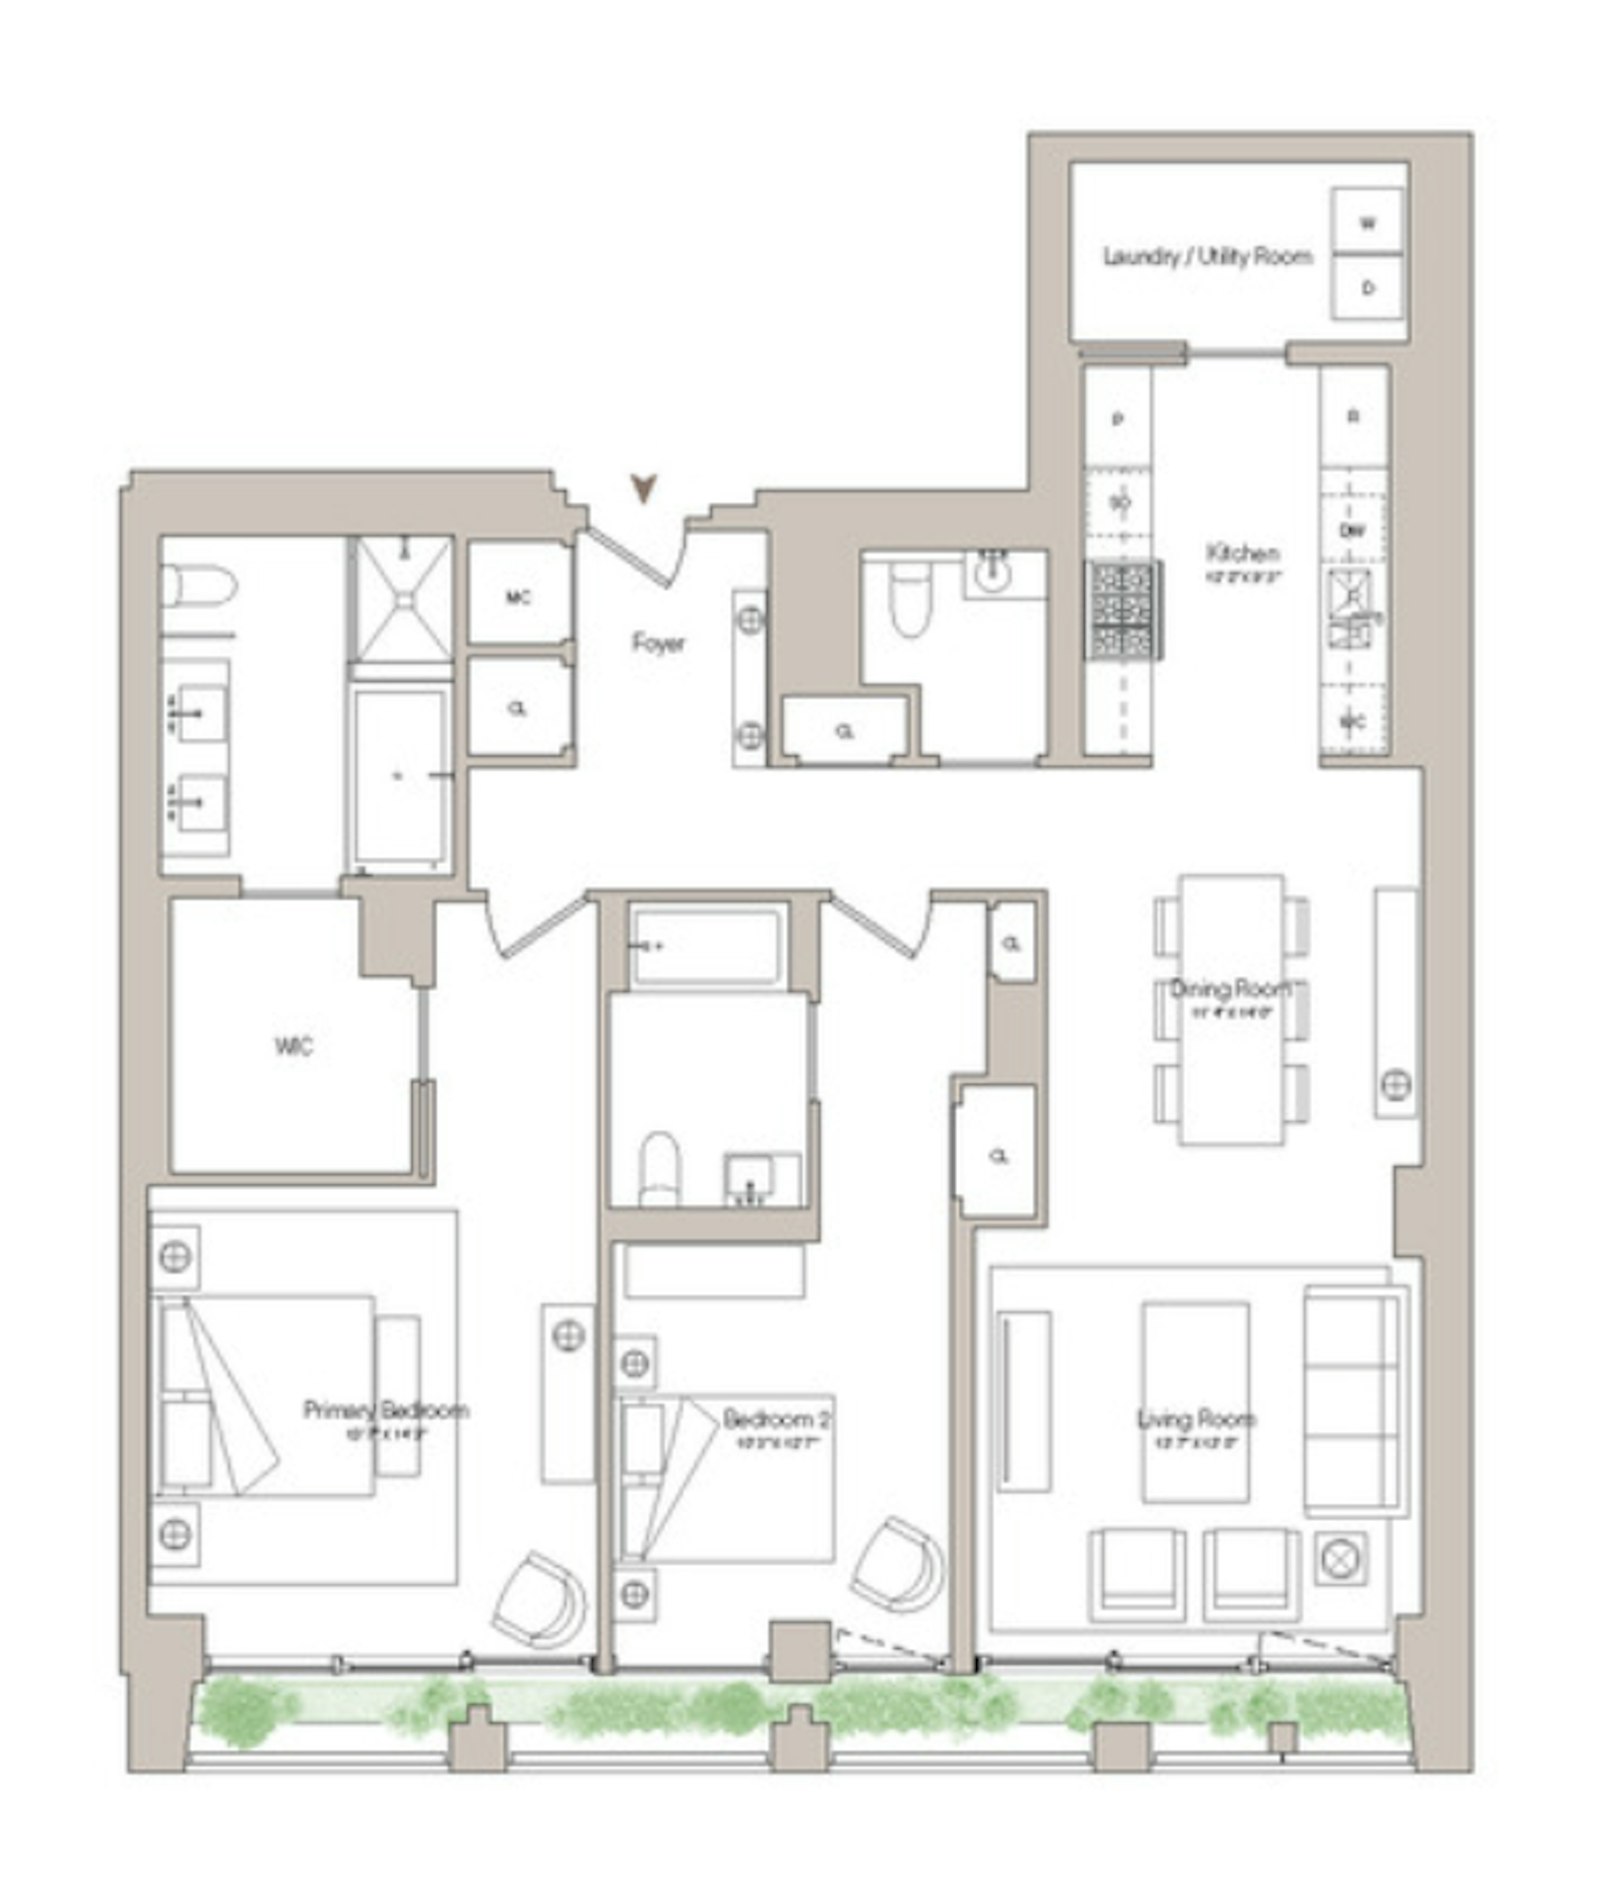 Floorplan for 39 West 23rd Street, 7A